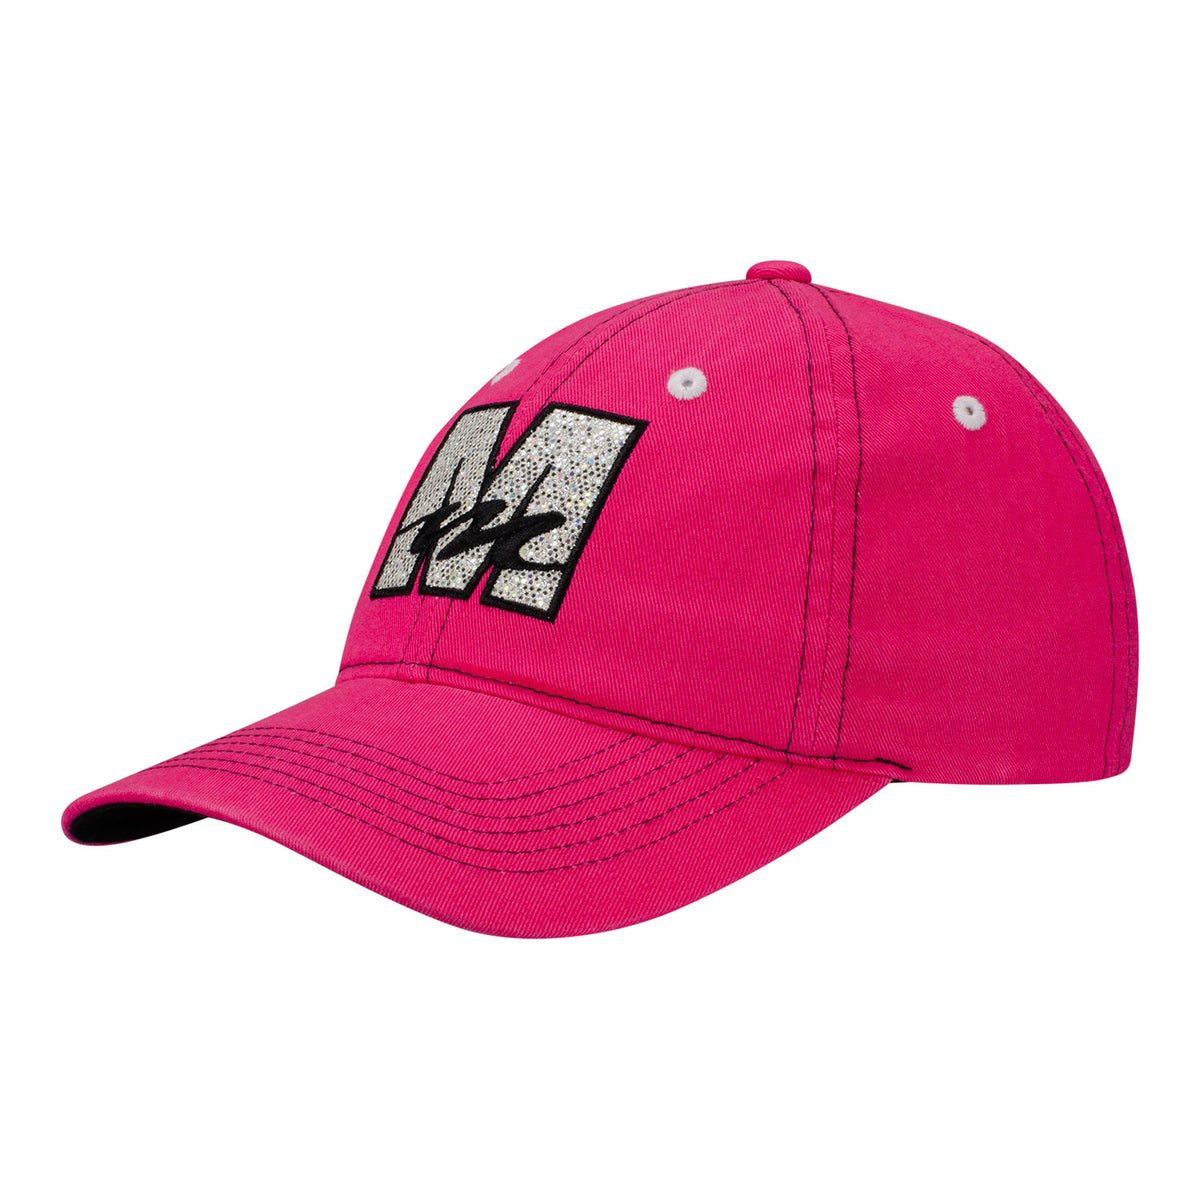 Mecum Auctions Ladies Pink Glitter Hat - Front View